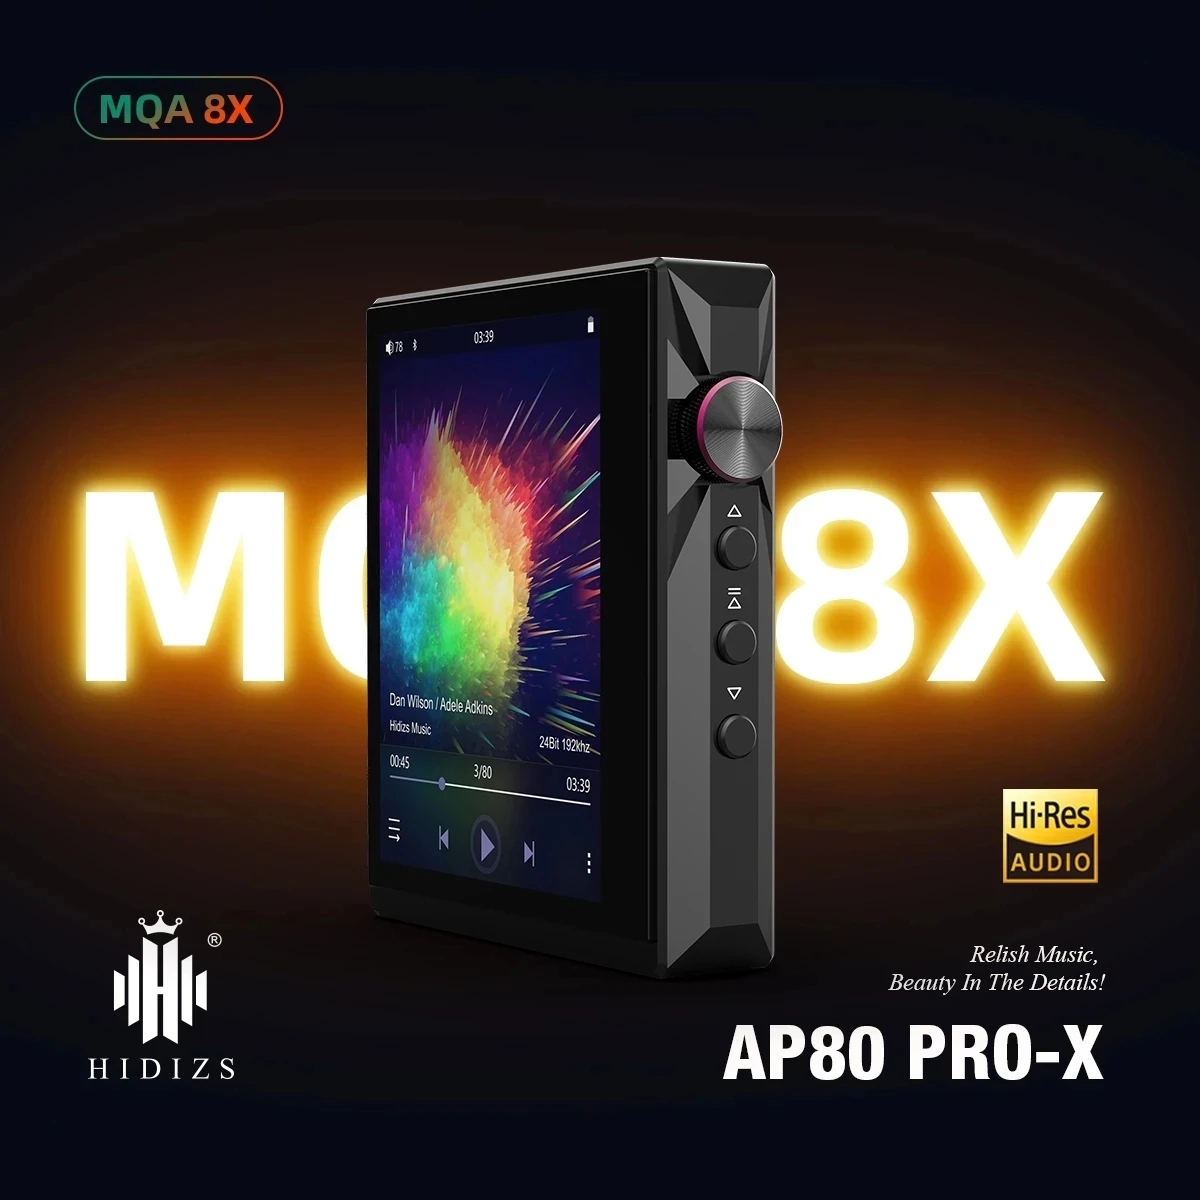 Hidizs AP80PRO-X (Ap80 pro x ) Bluetooth Portable Music Player MQA 8X MP3  USB DAC Hi-Res Audio DSD64/128 FLAC LDAC FM Radio DAP